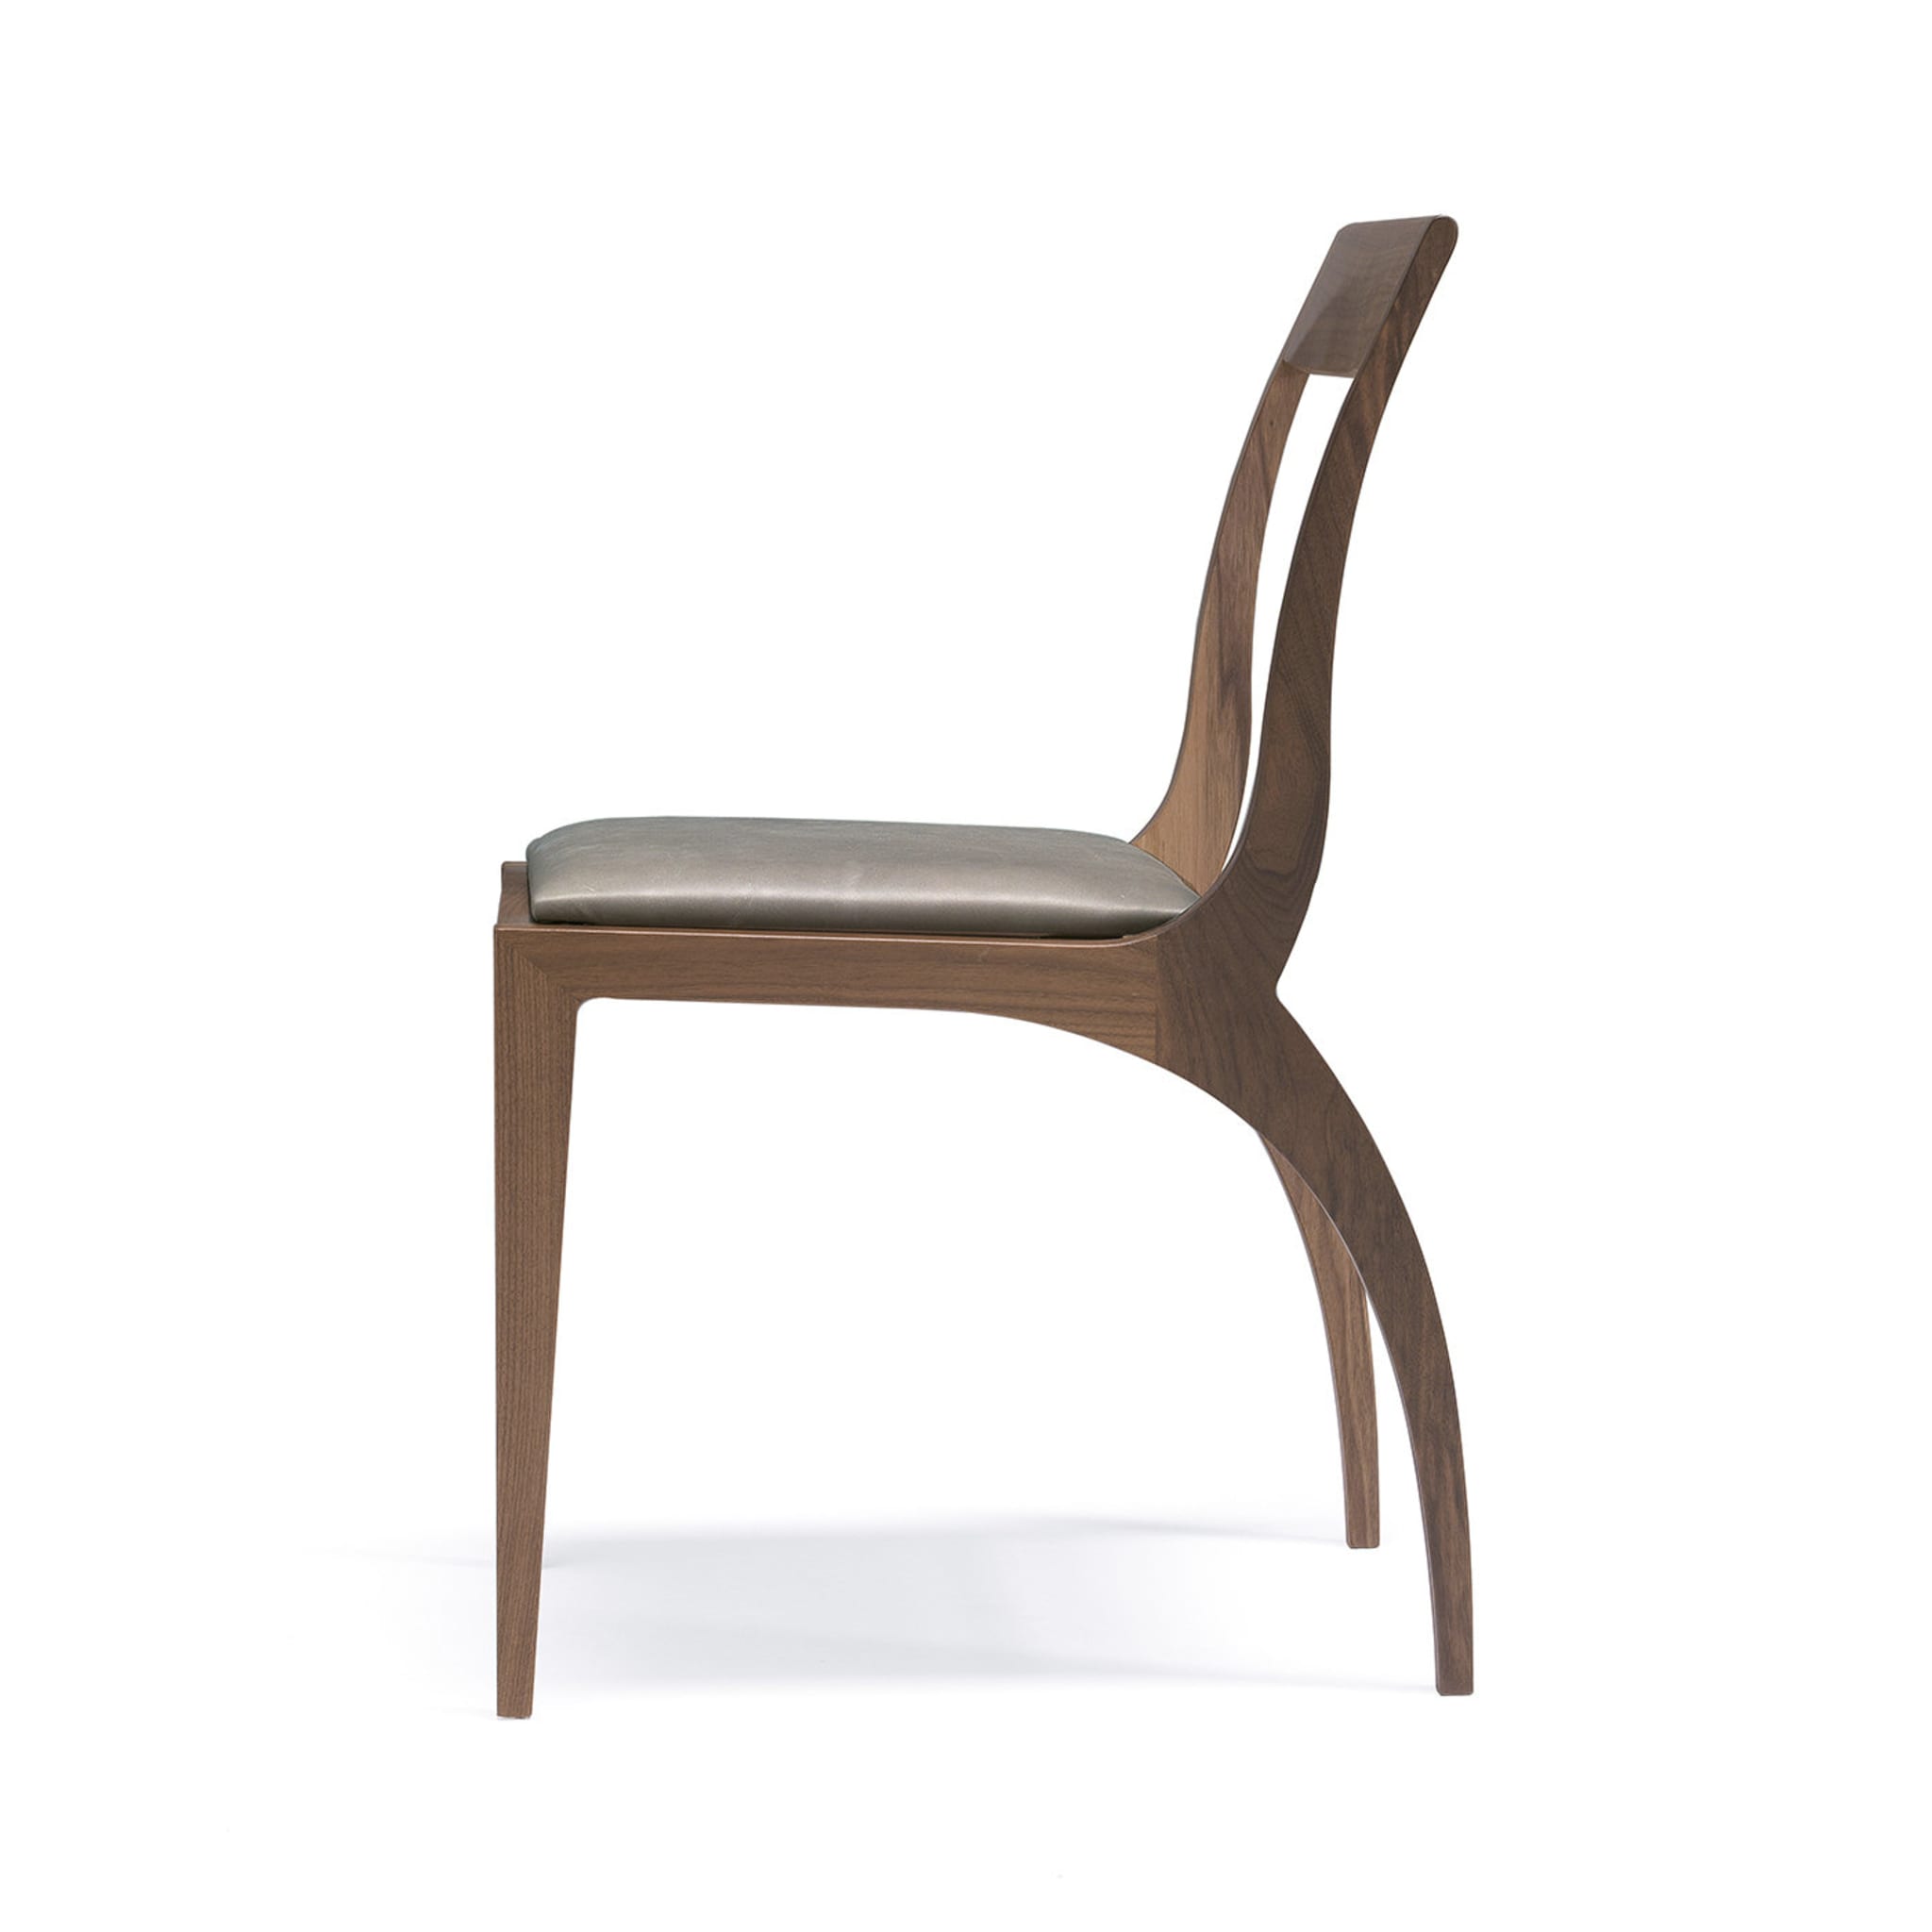 Thelma Grey Chair by Fabio Rebosio - Alternative view 1